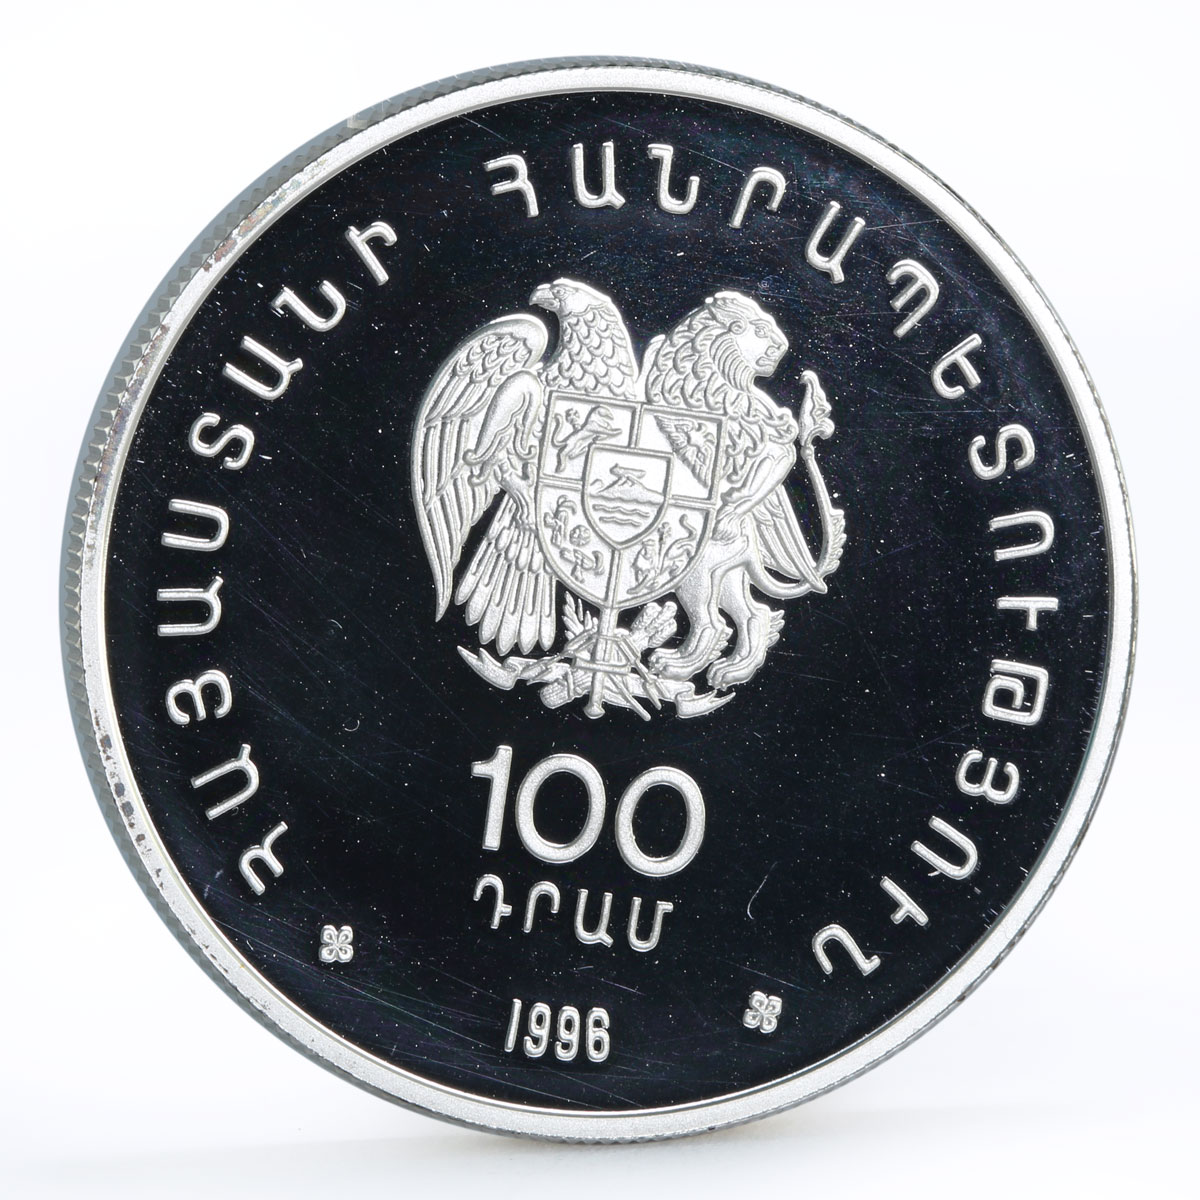 Armenia 100 dram 32th Chess Olympiad in Yerevan Bird Board silver coin 1996